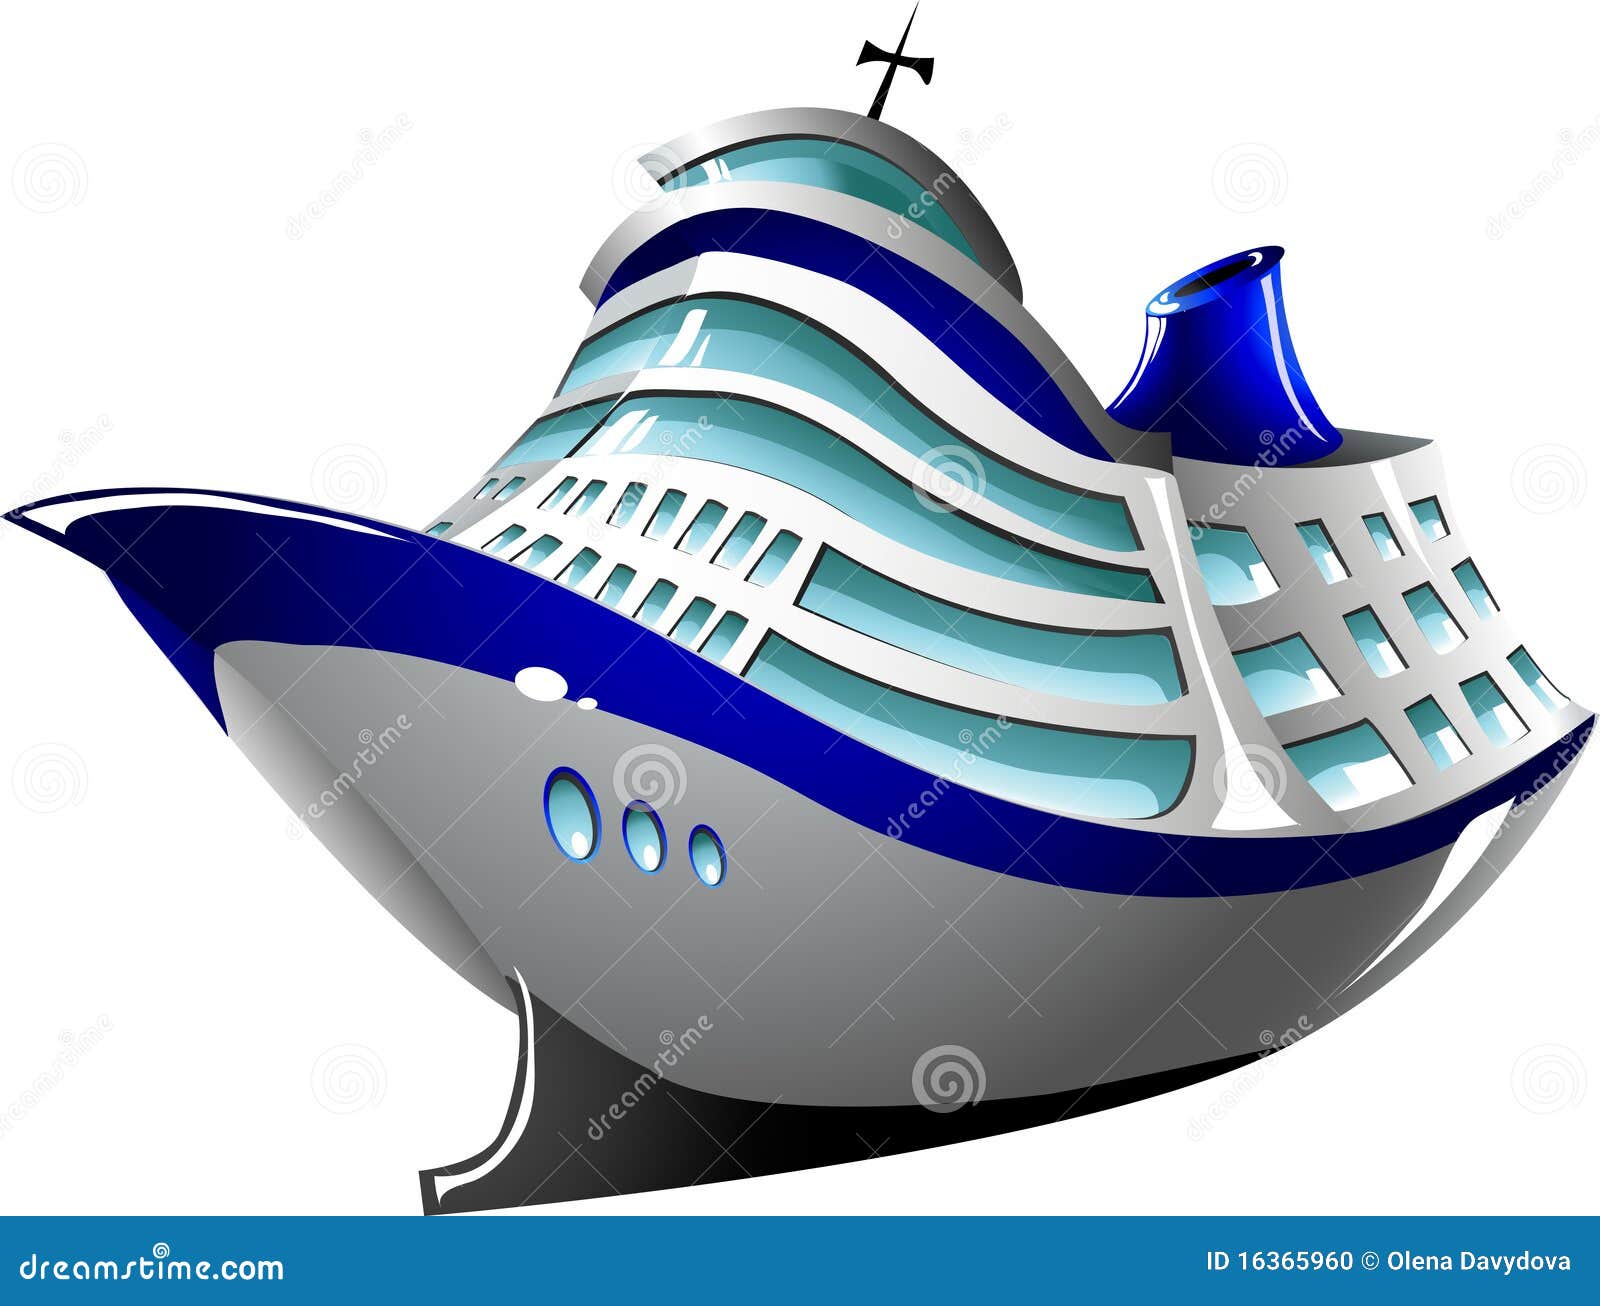 Cartoon Ship Stock Photo - Image: 16365960